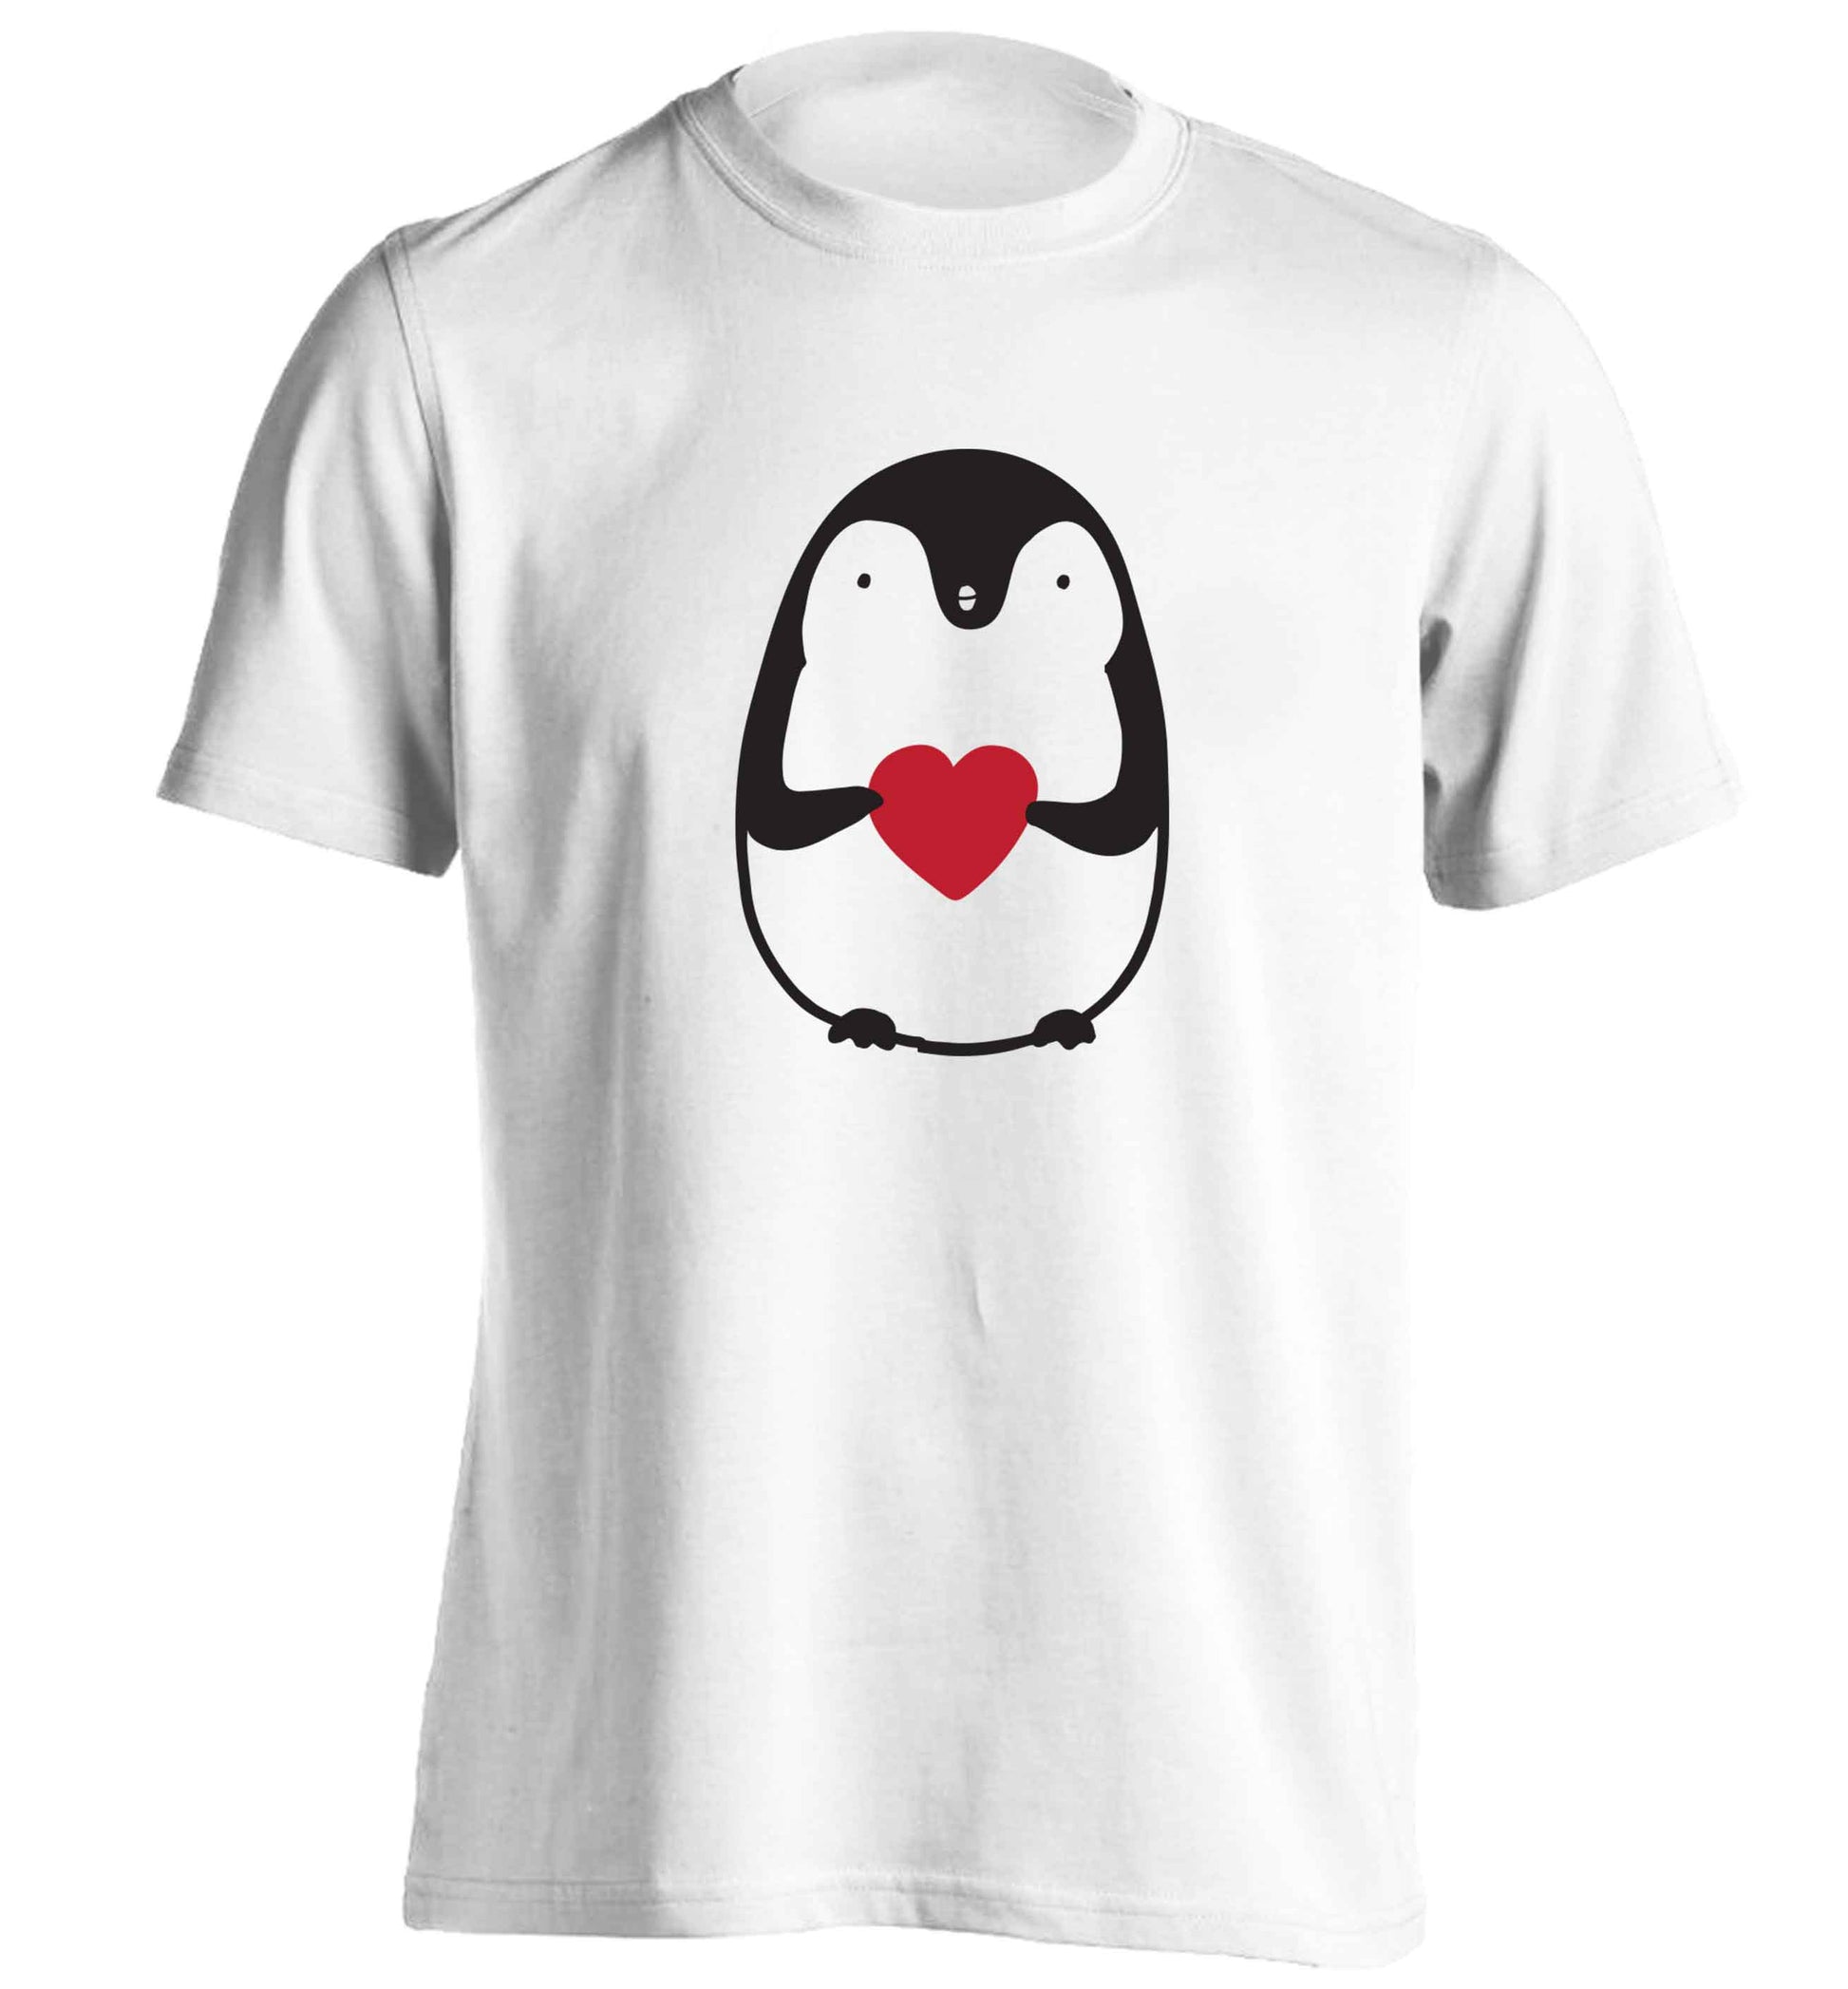 Cute penguin heart adults unisex white Tshirt 2XL